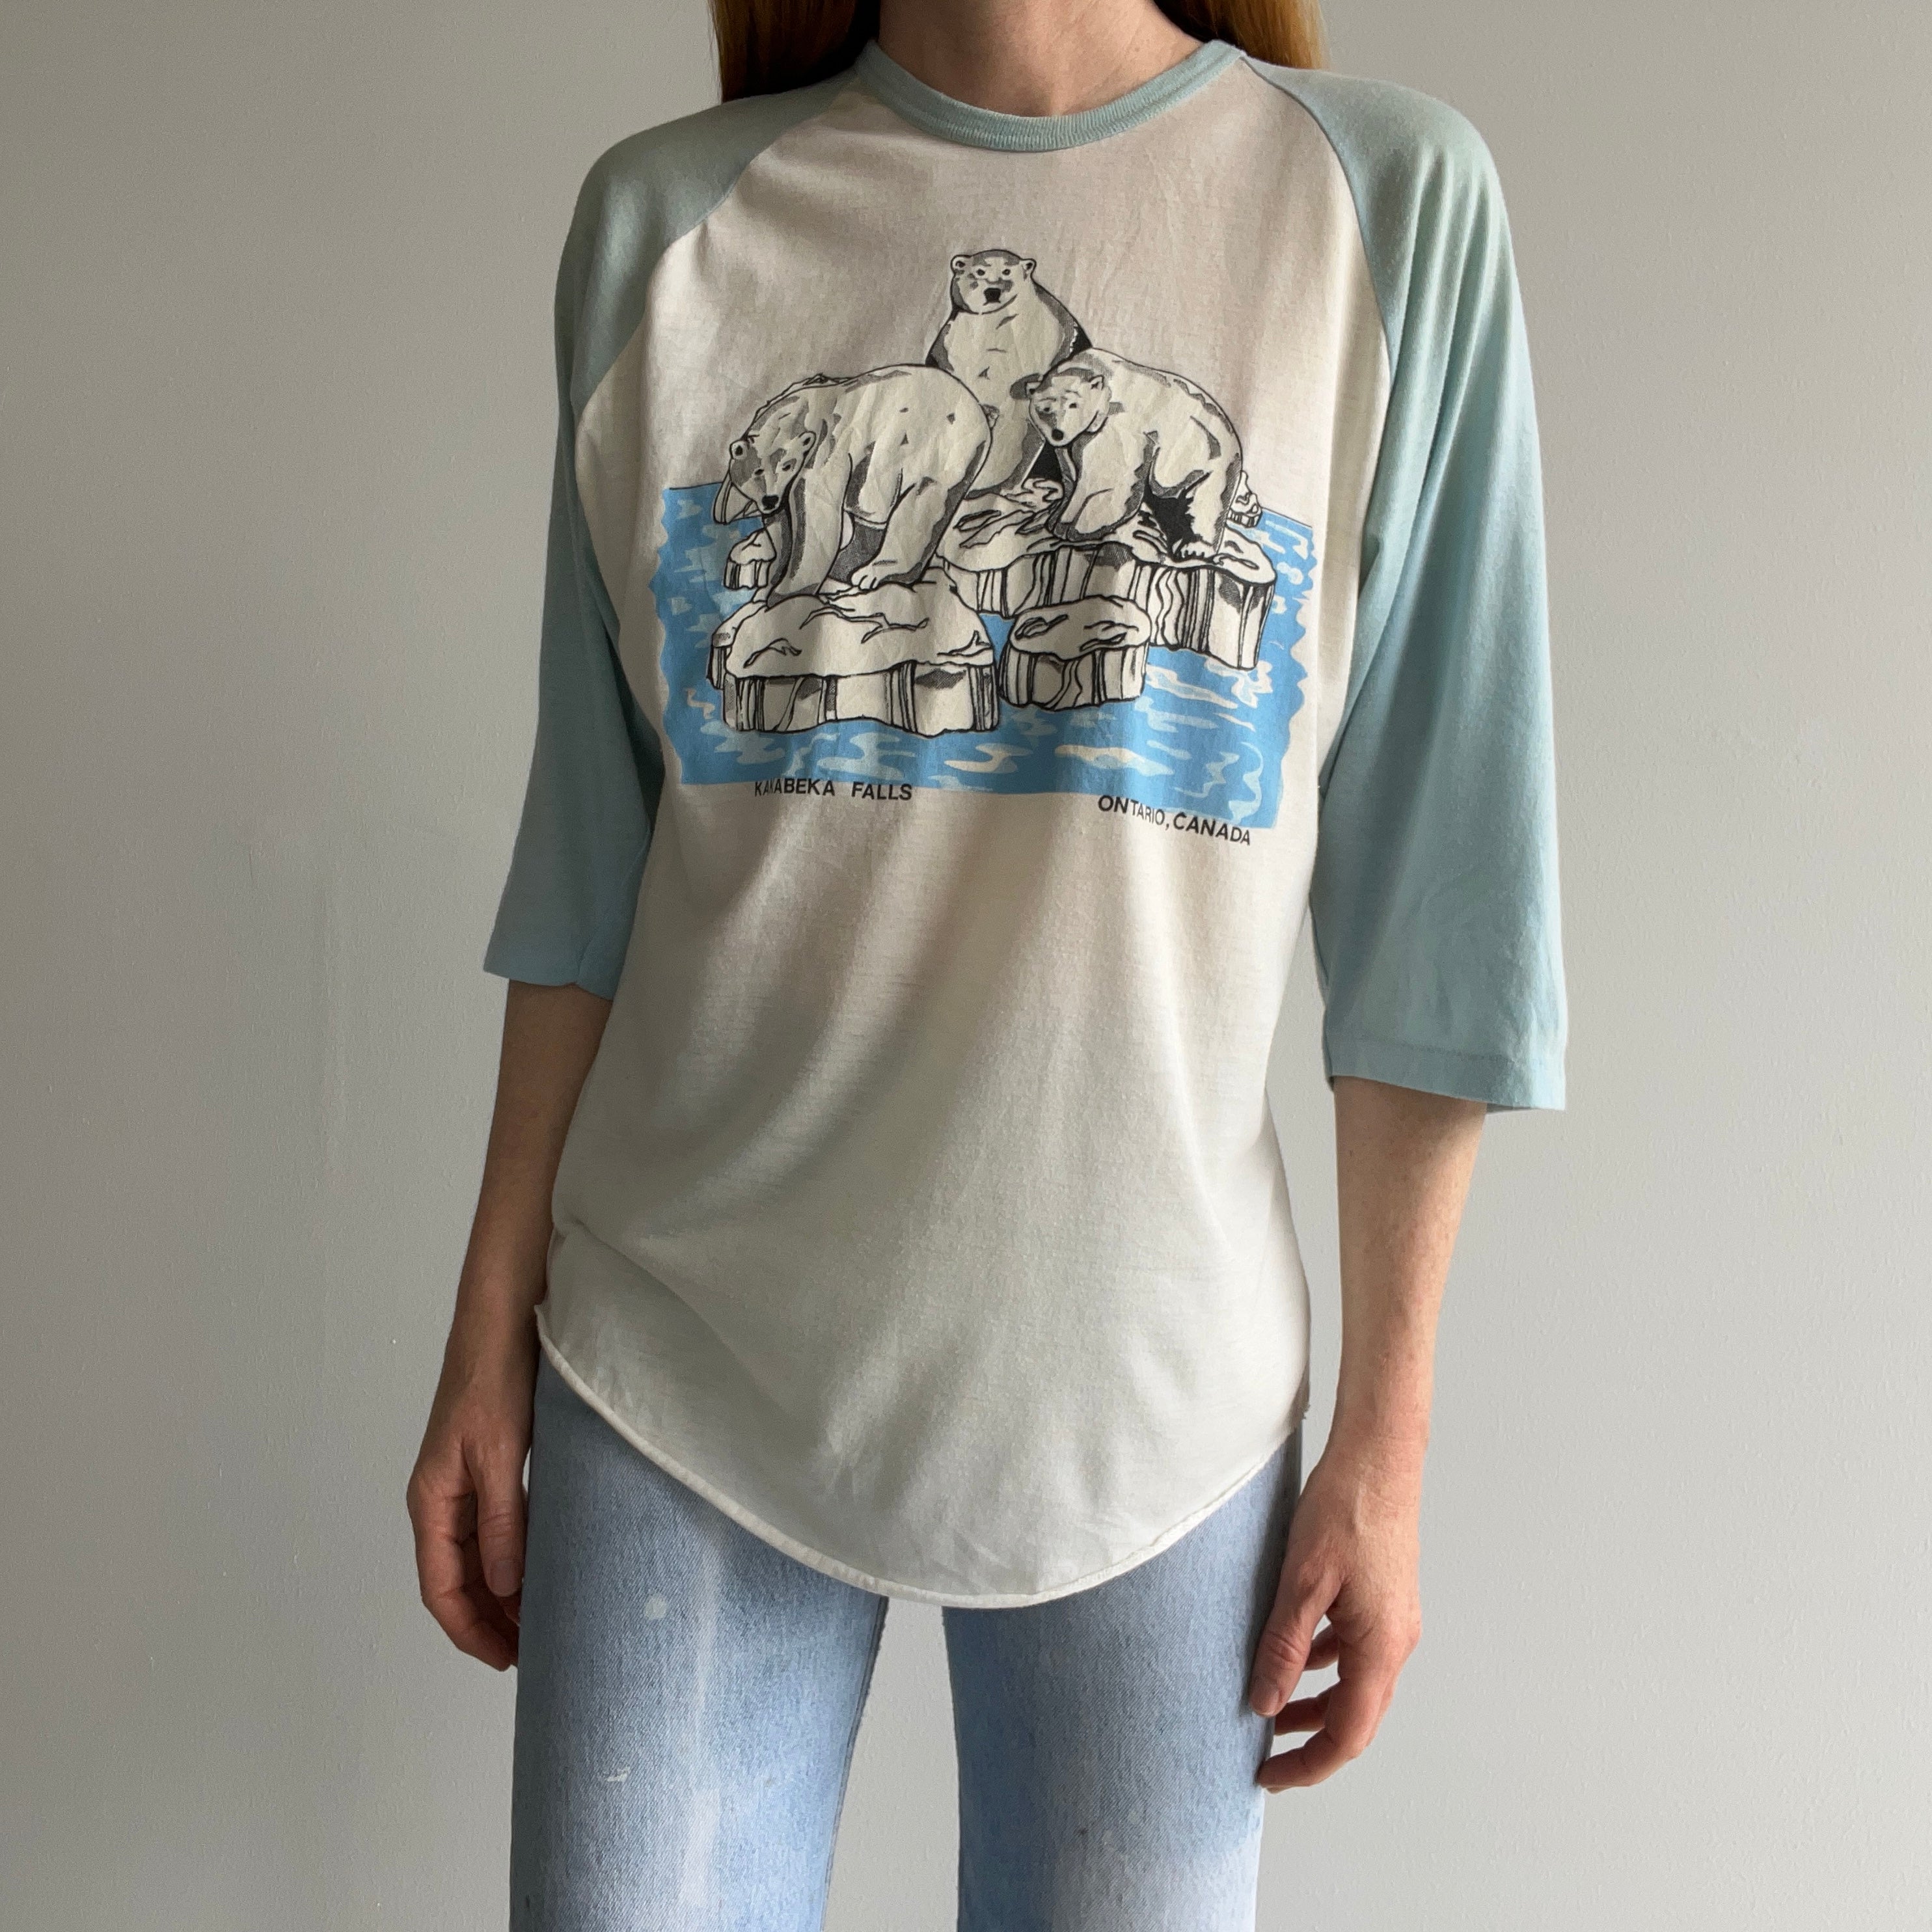 1970/80s Polar Bear Kakabeka Falls, Ontario Canada Aged Baseball T-Shirt